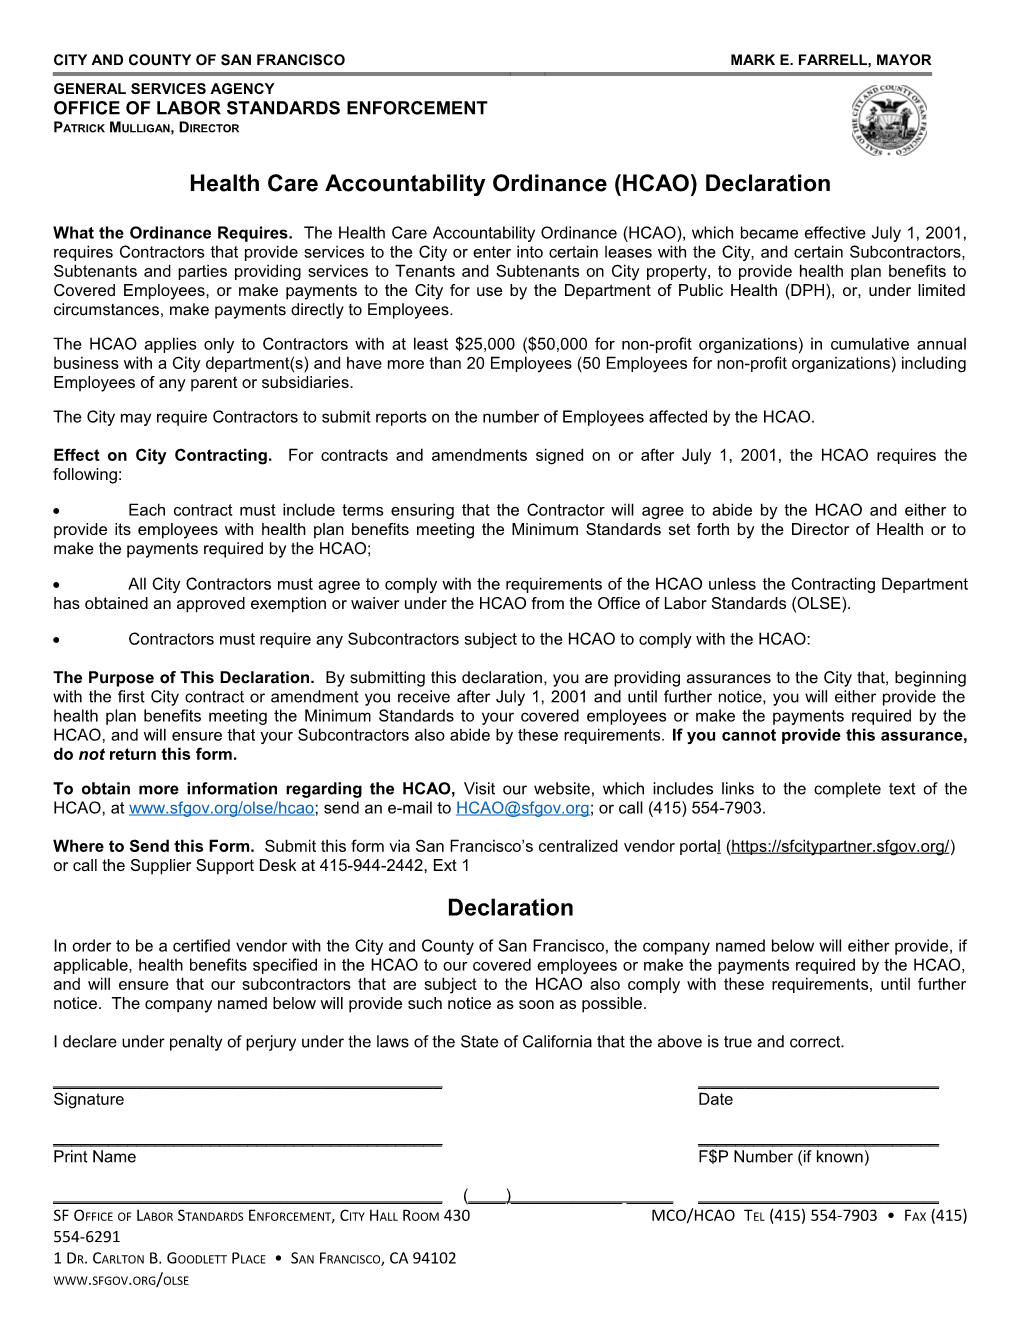 Health Care Accountability Ordinance (HCAO) Declaration